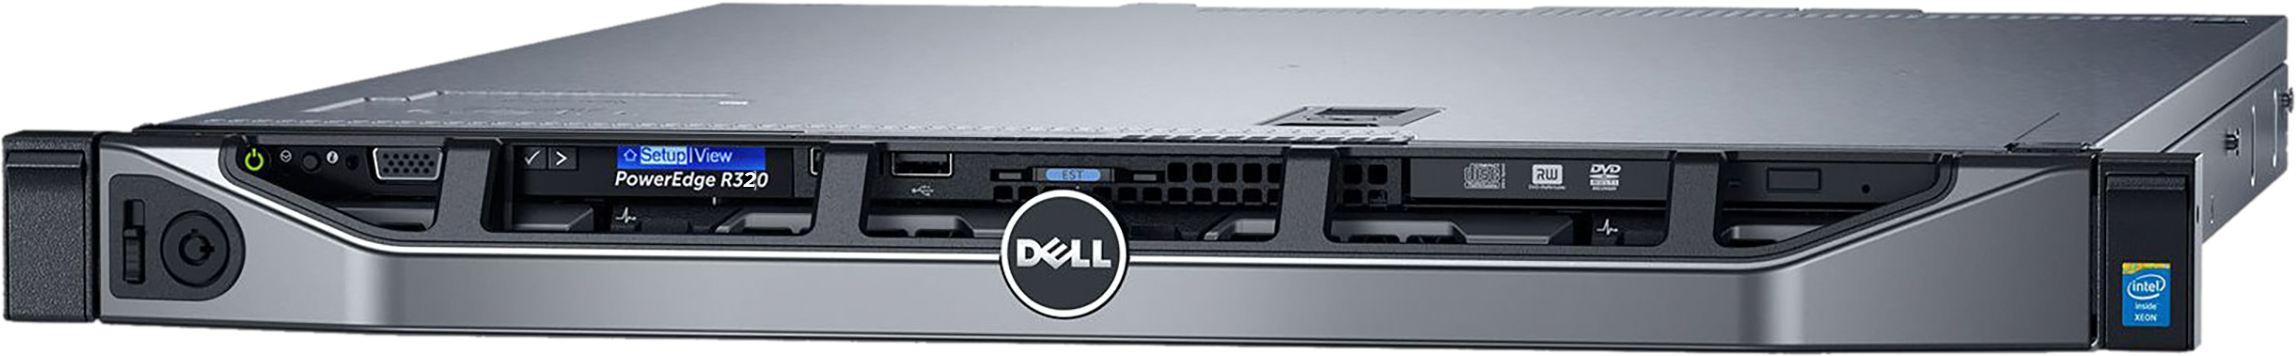 Аренда физического сервера DELL R320 / E5-2420 v2 / 8 GB RAM / 4 x 4 TB HDD / H310